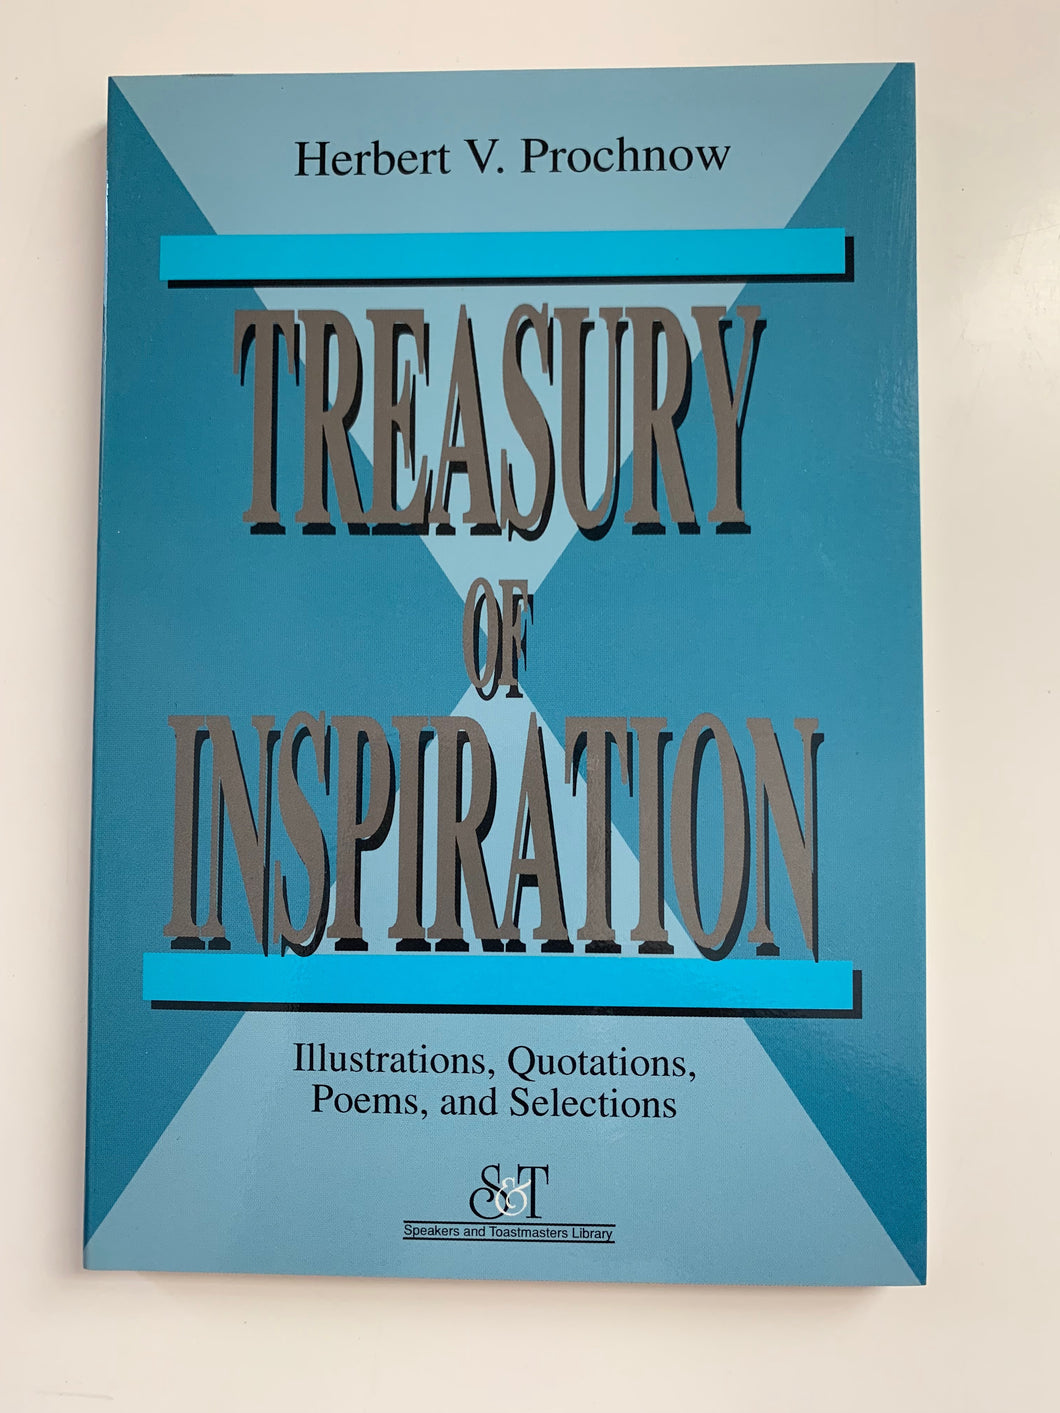 Treasury of Inspritation by Herbert V. Prochnow